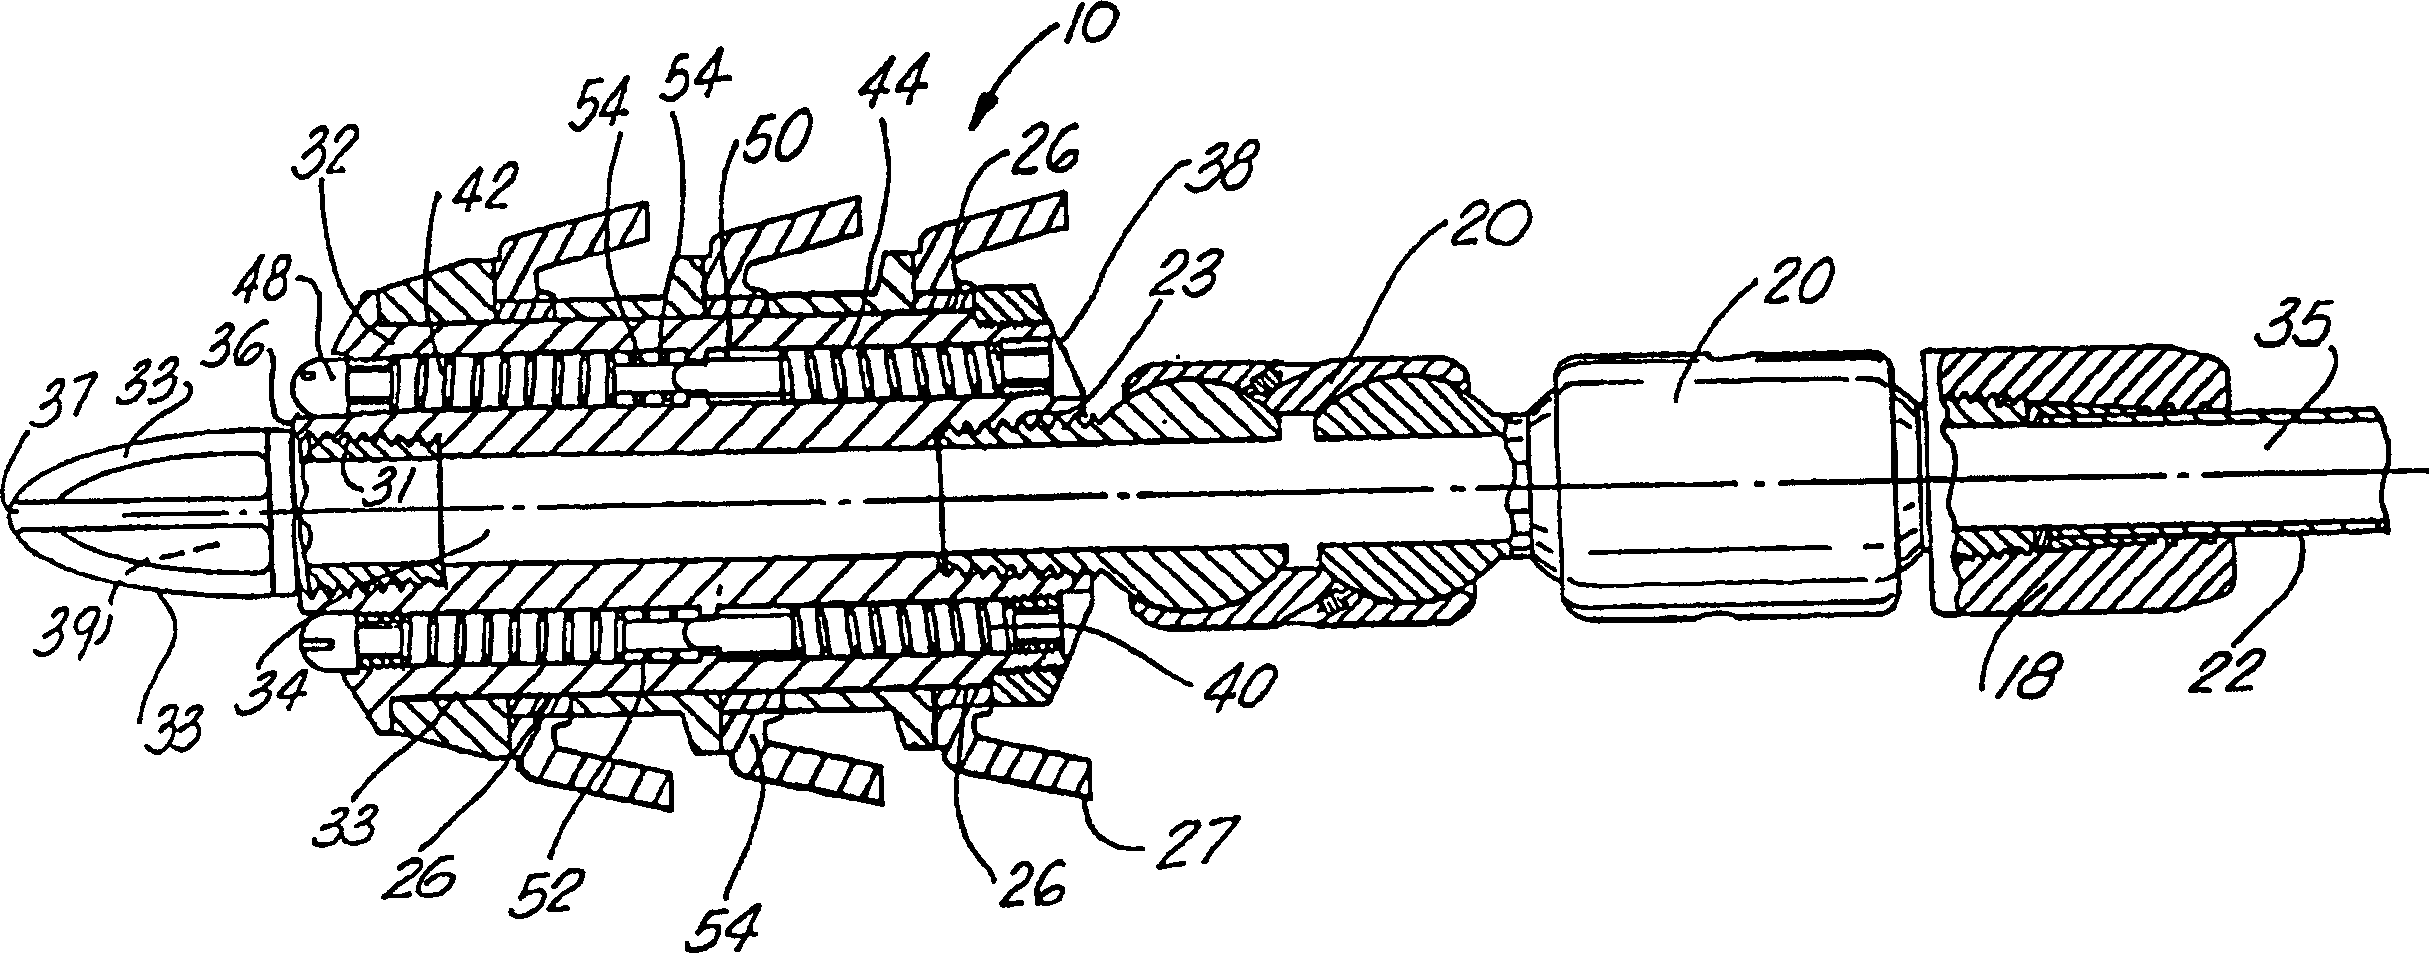 Bi-directional thruster pig apparatus and method of utilizing same